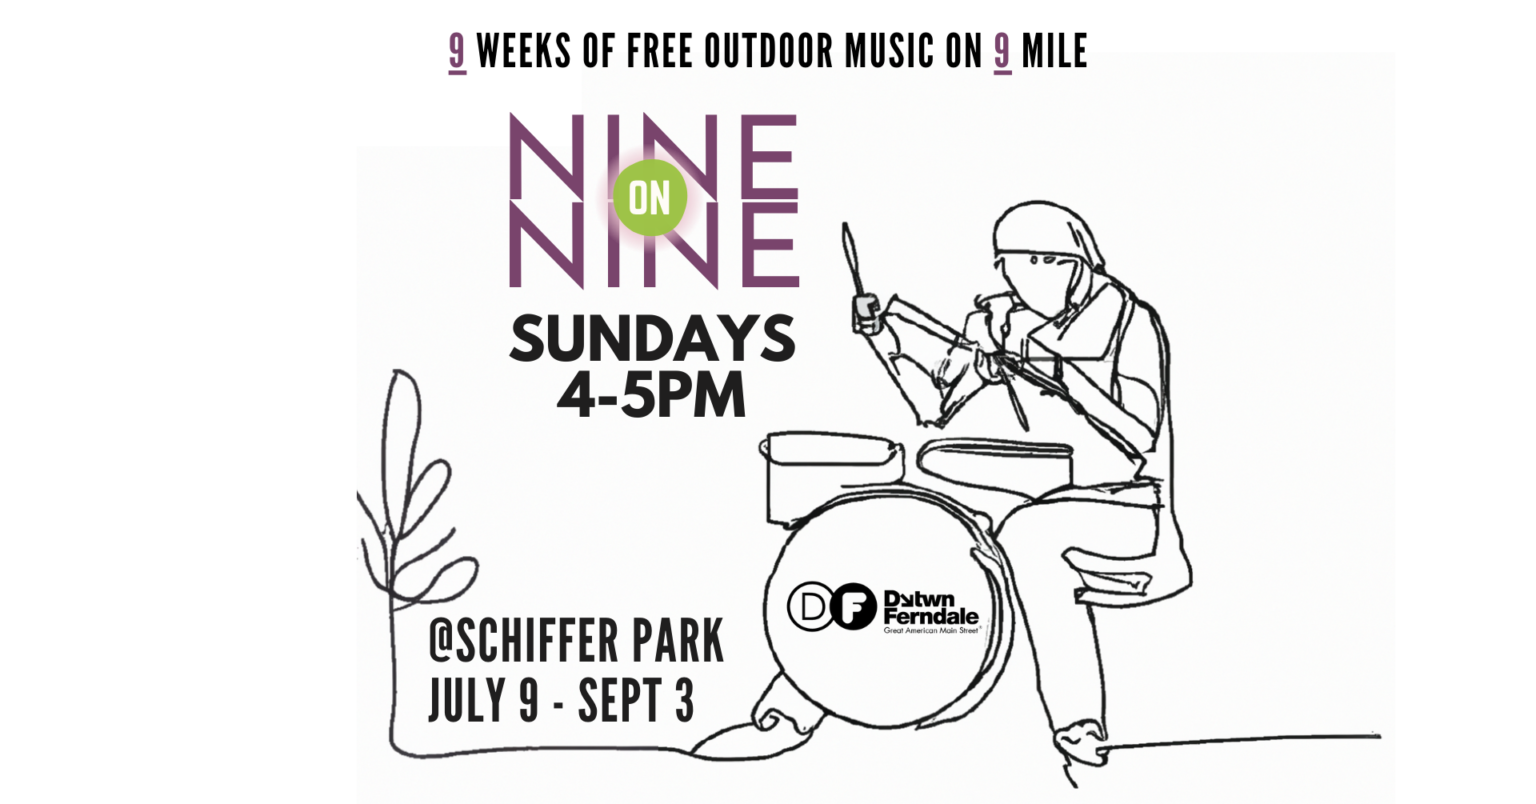 Nine on Nine Concert Series Downtown Ferndale